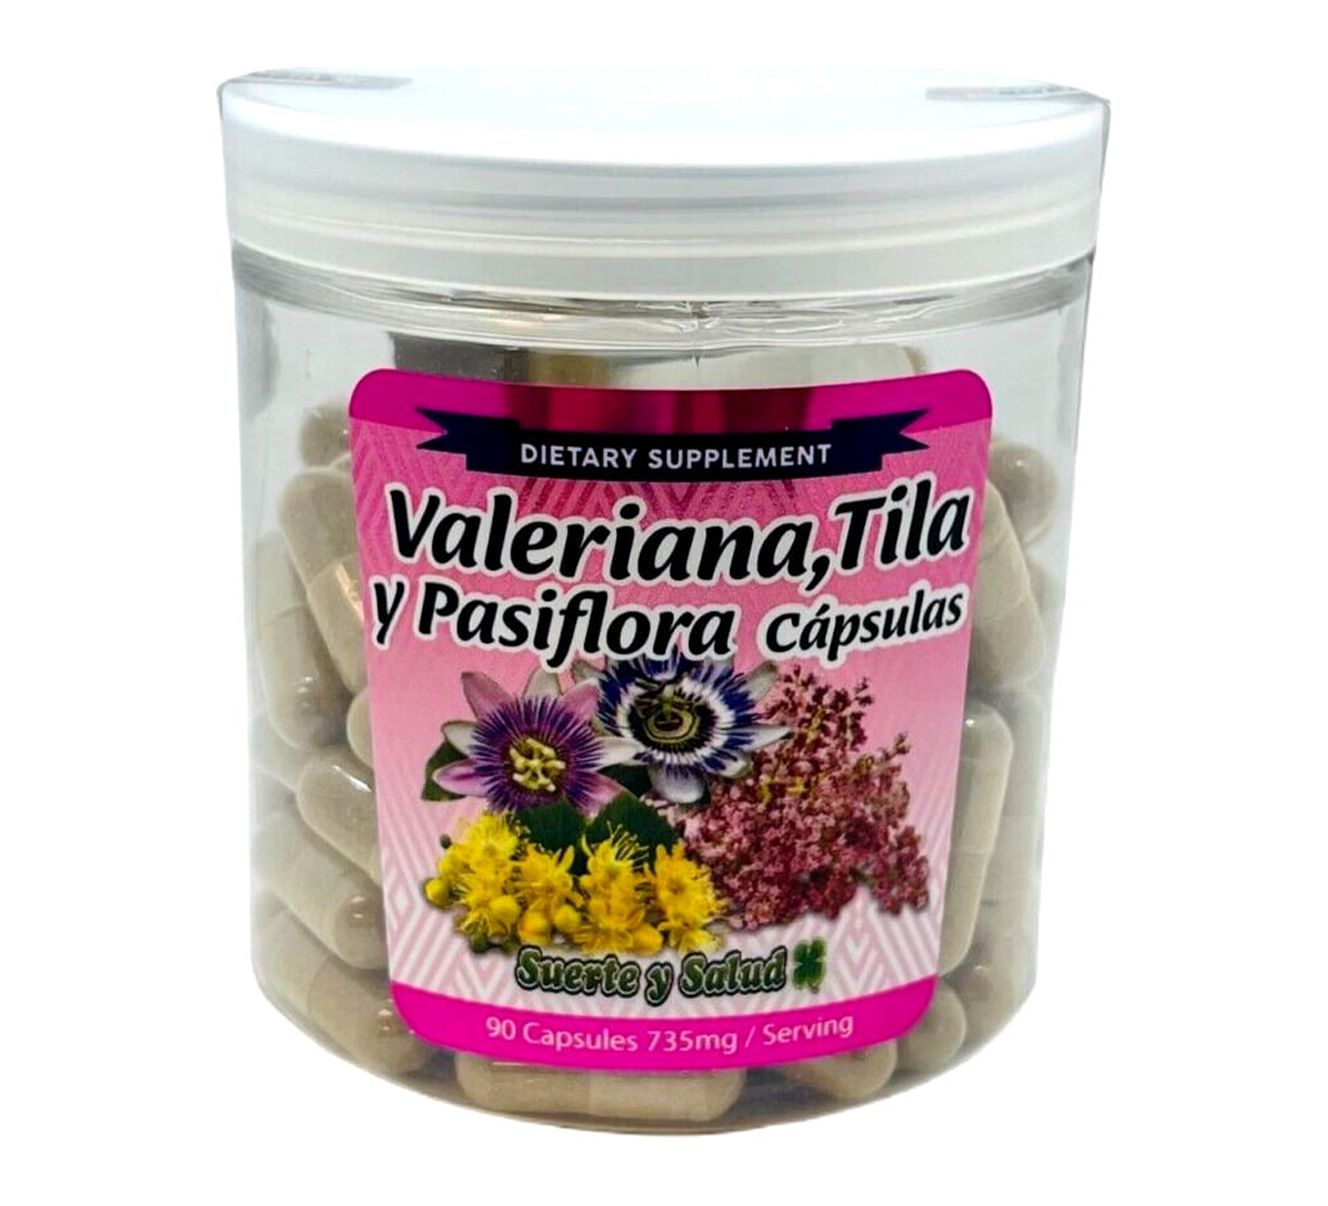 Valeriana, Tila Y Pasiflora 90 Capsulas 735mg 100% Natural - image 1 of 1